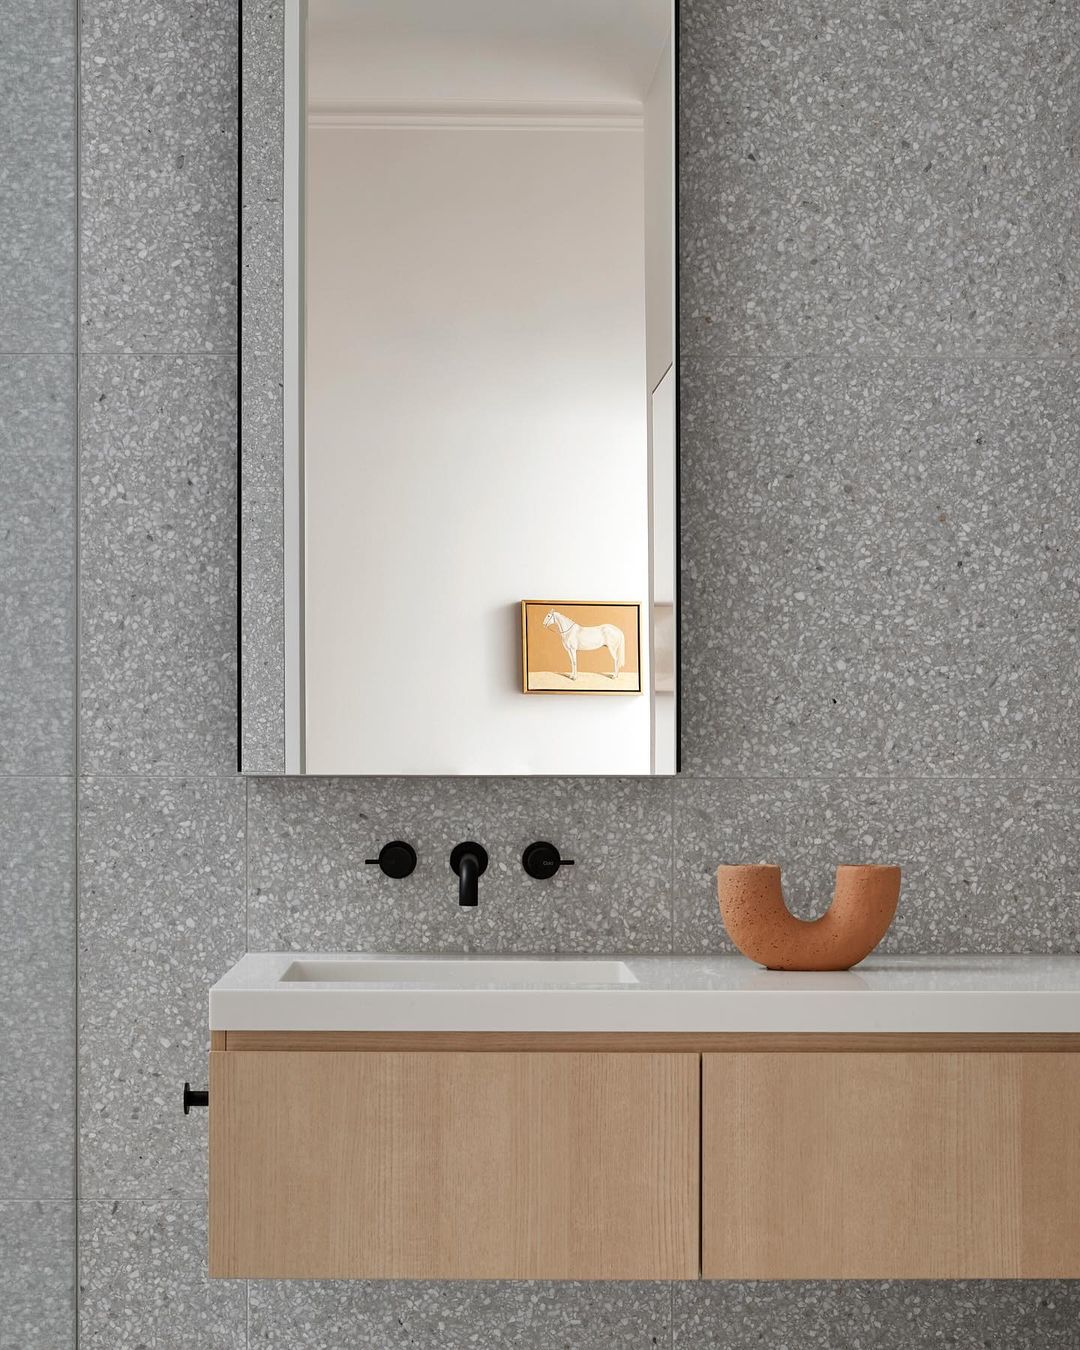 Gray terrazzo-style bathroom tile